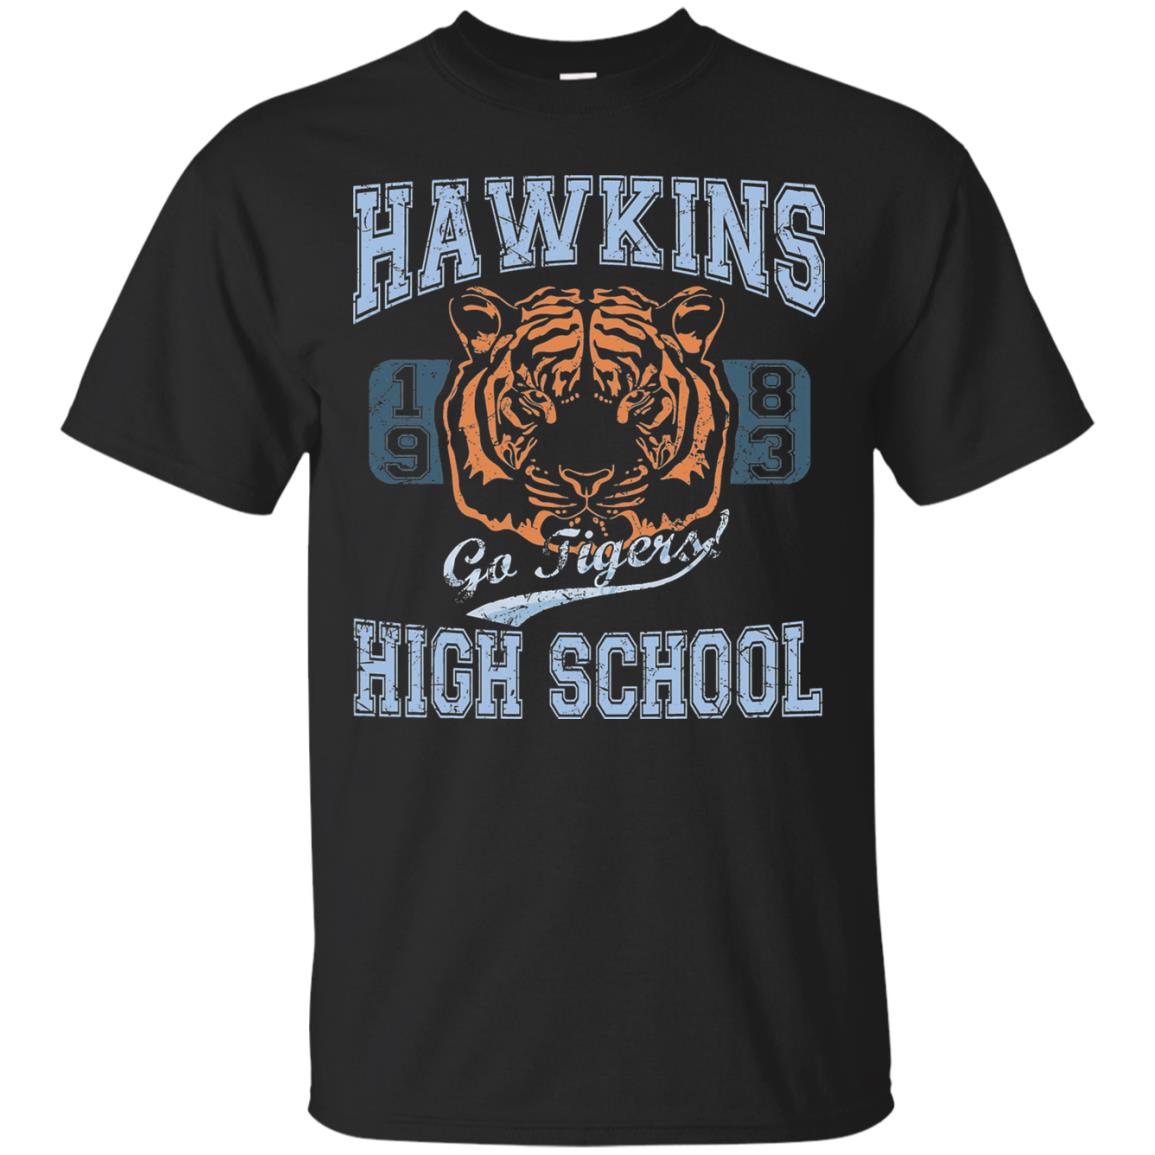 Hawkins High School T-shirt - black